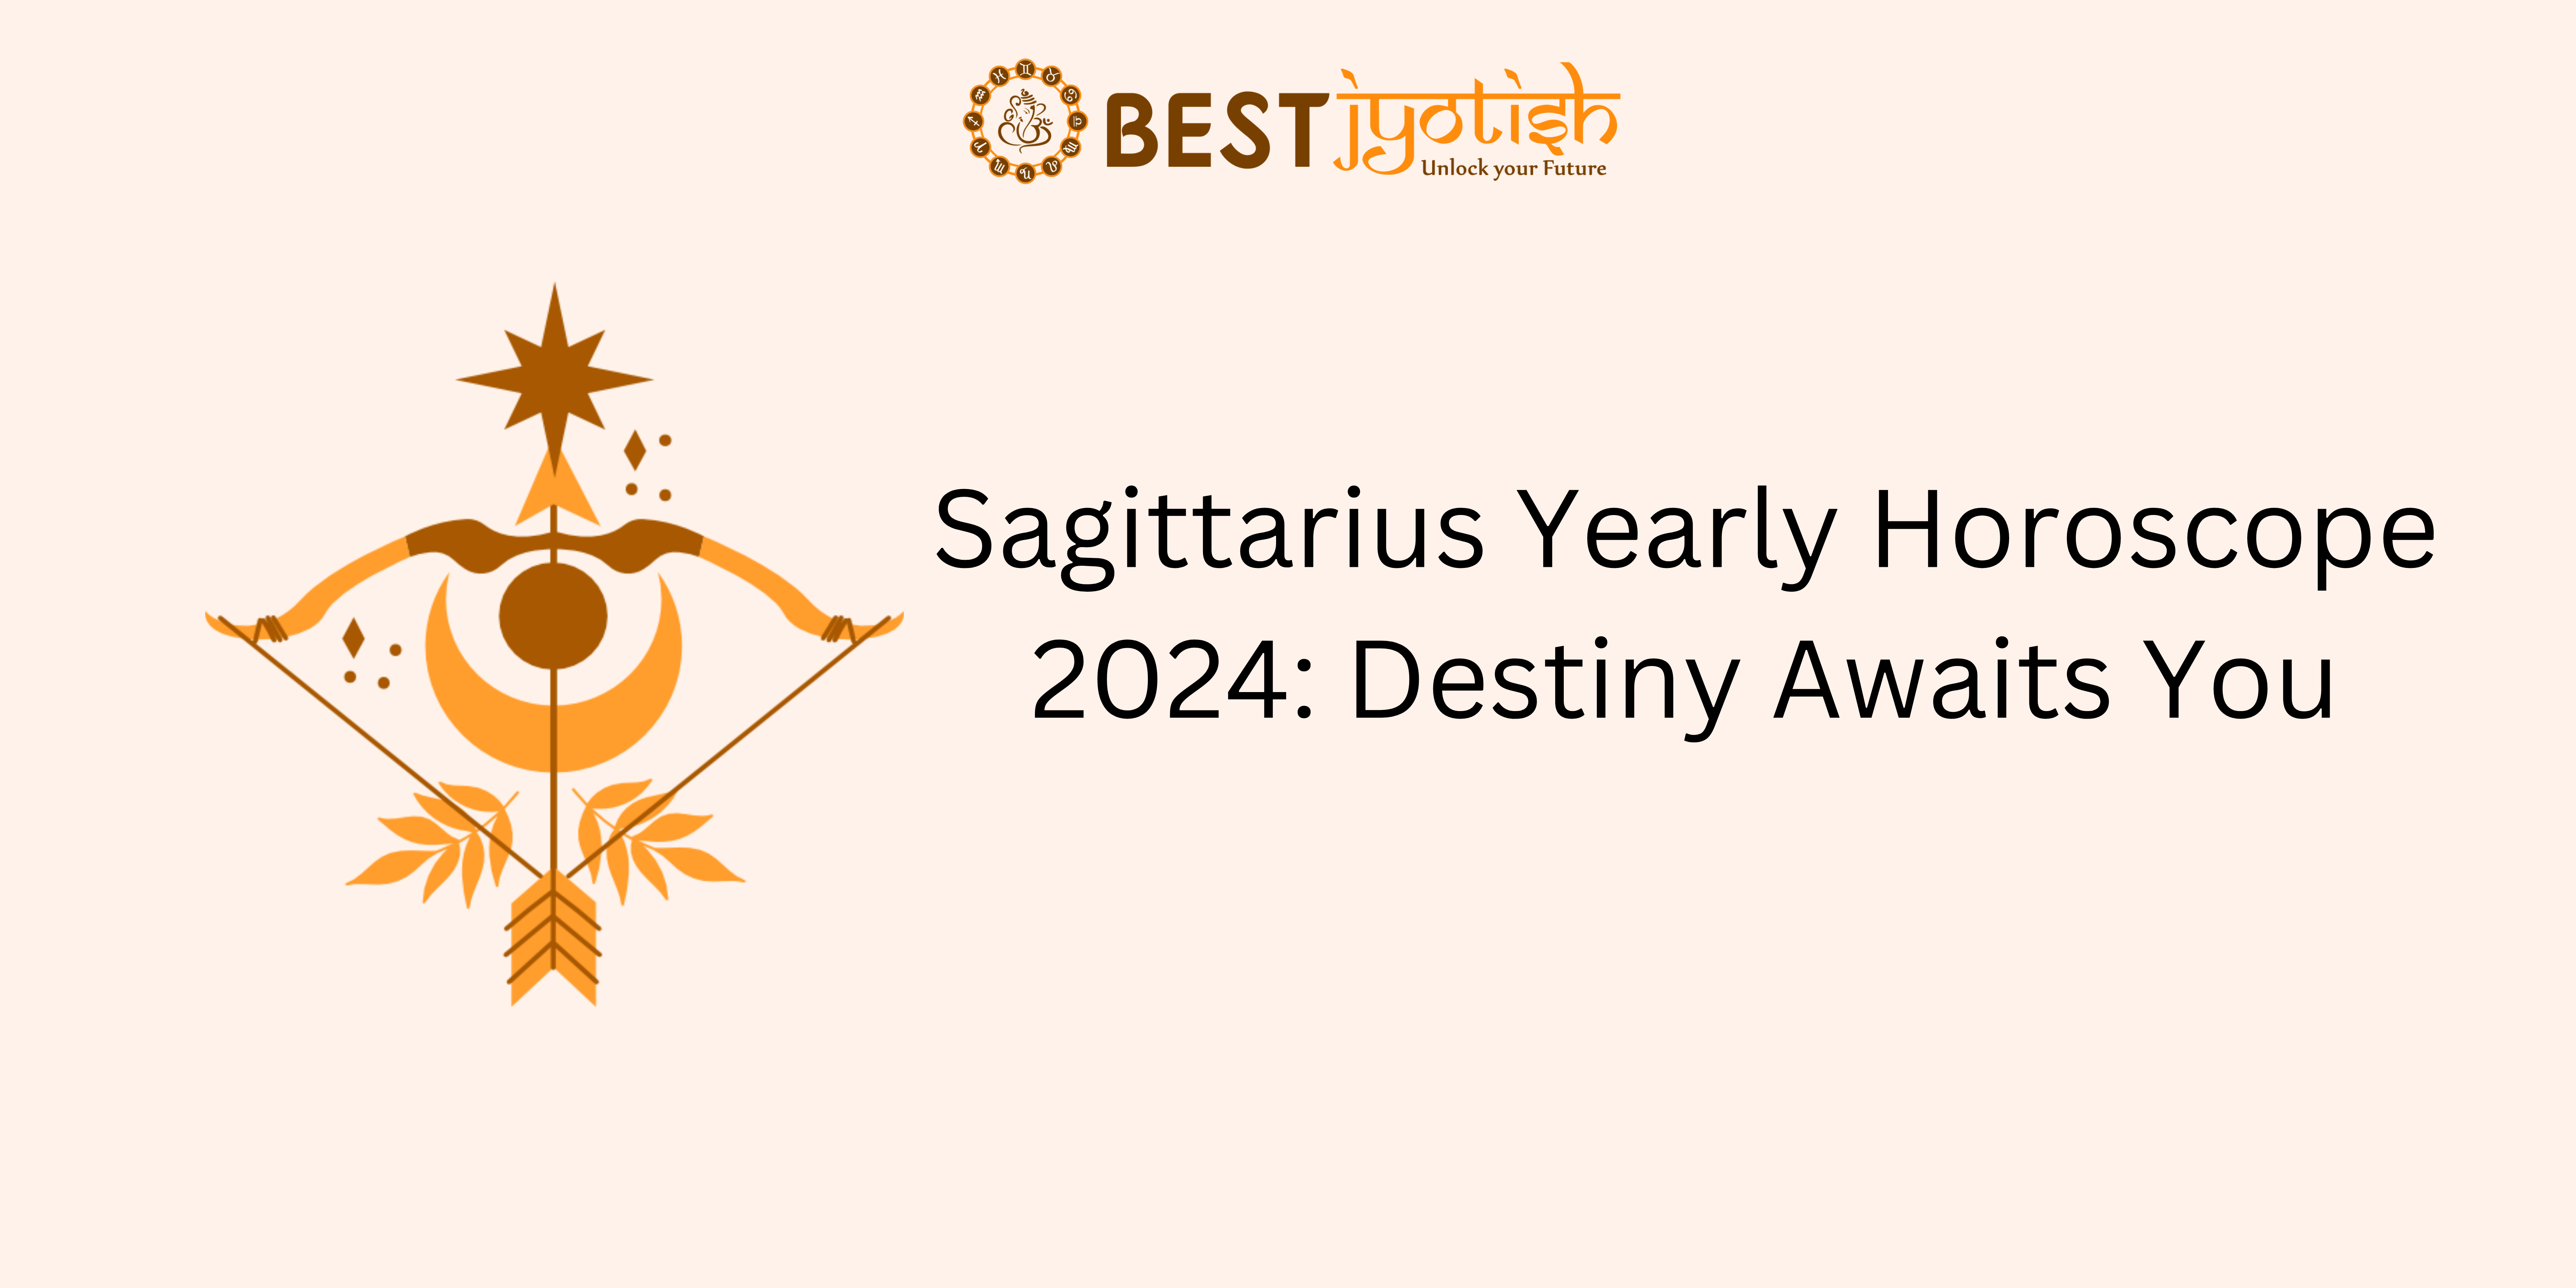 Sagittarius Yearly Horoscope 2024: Destiny Awaits You